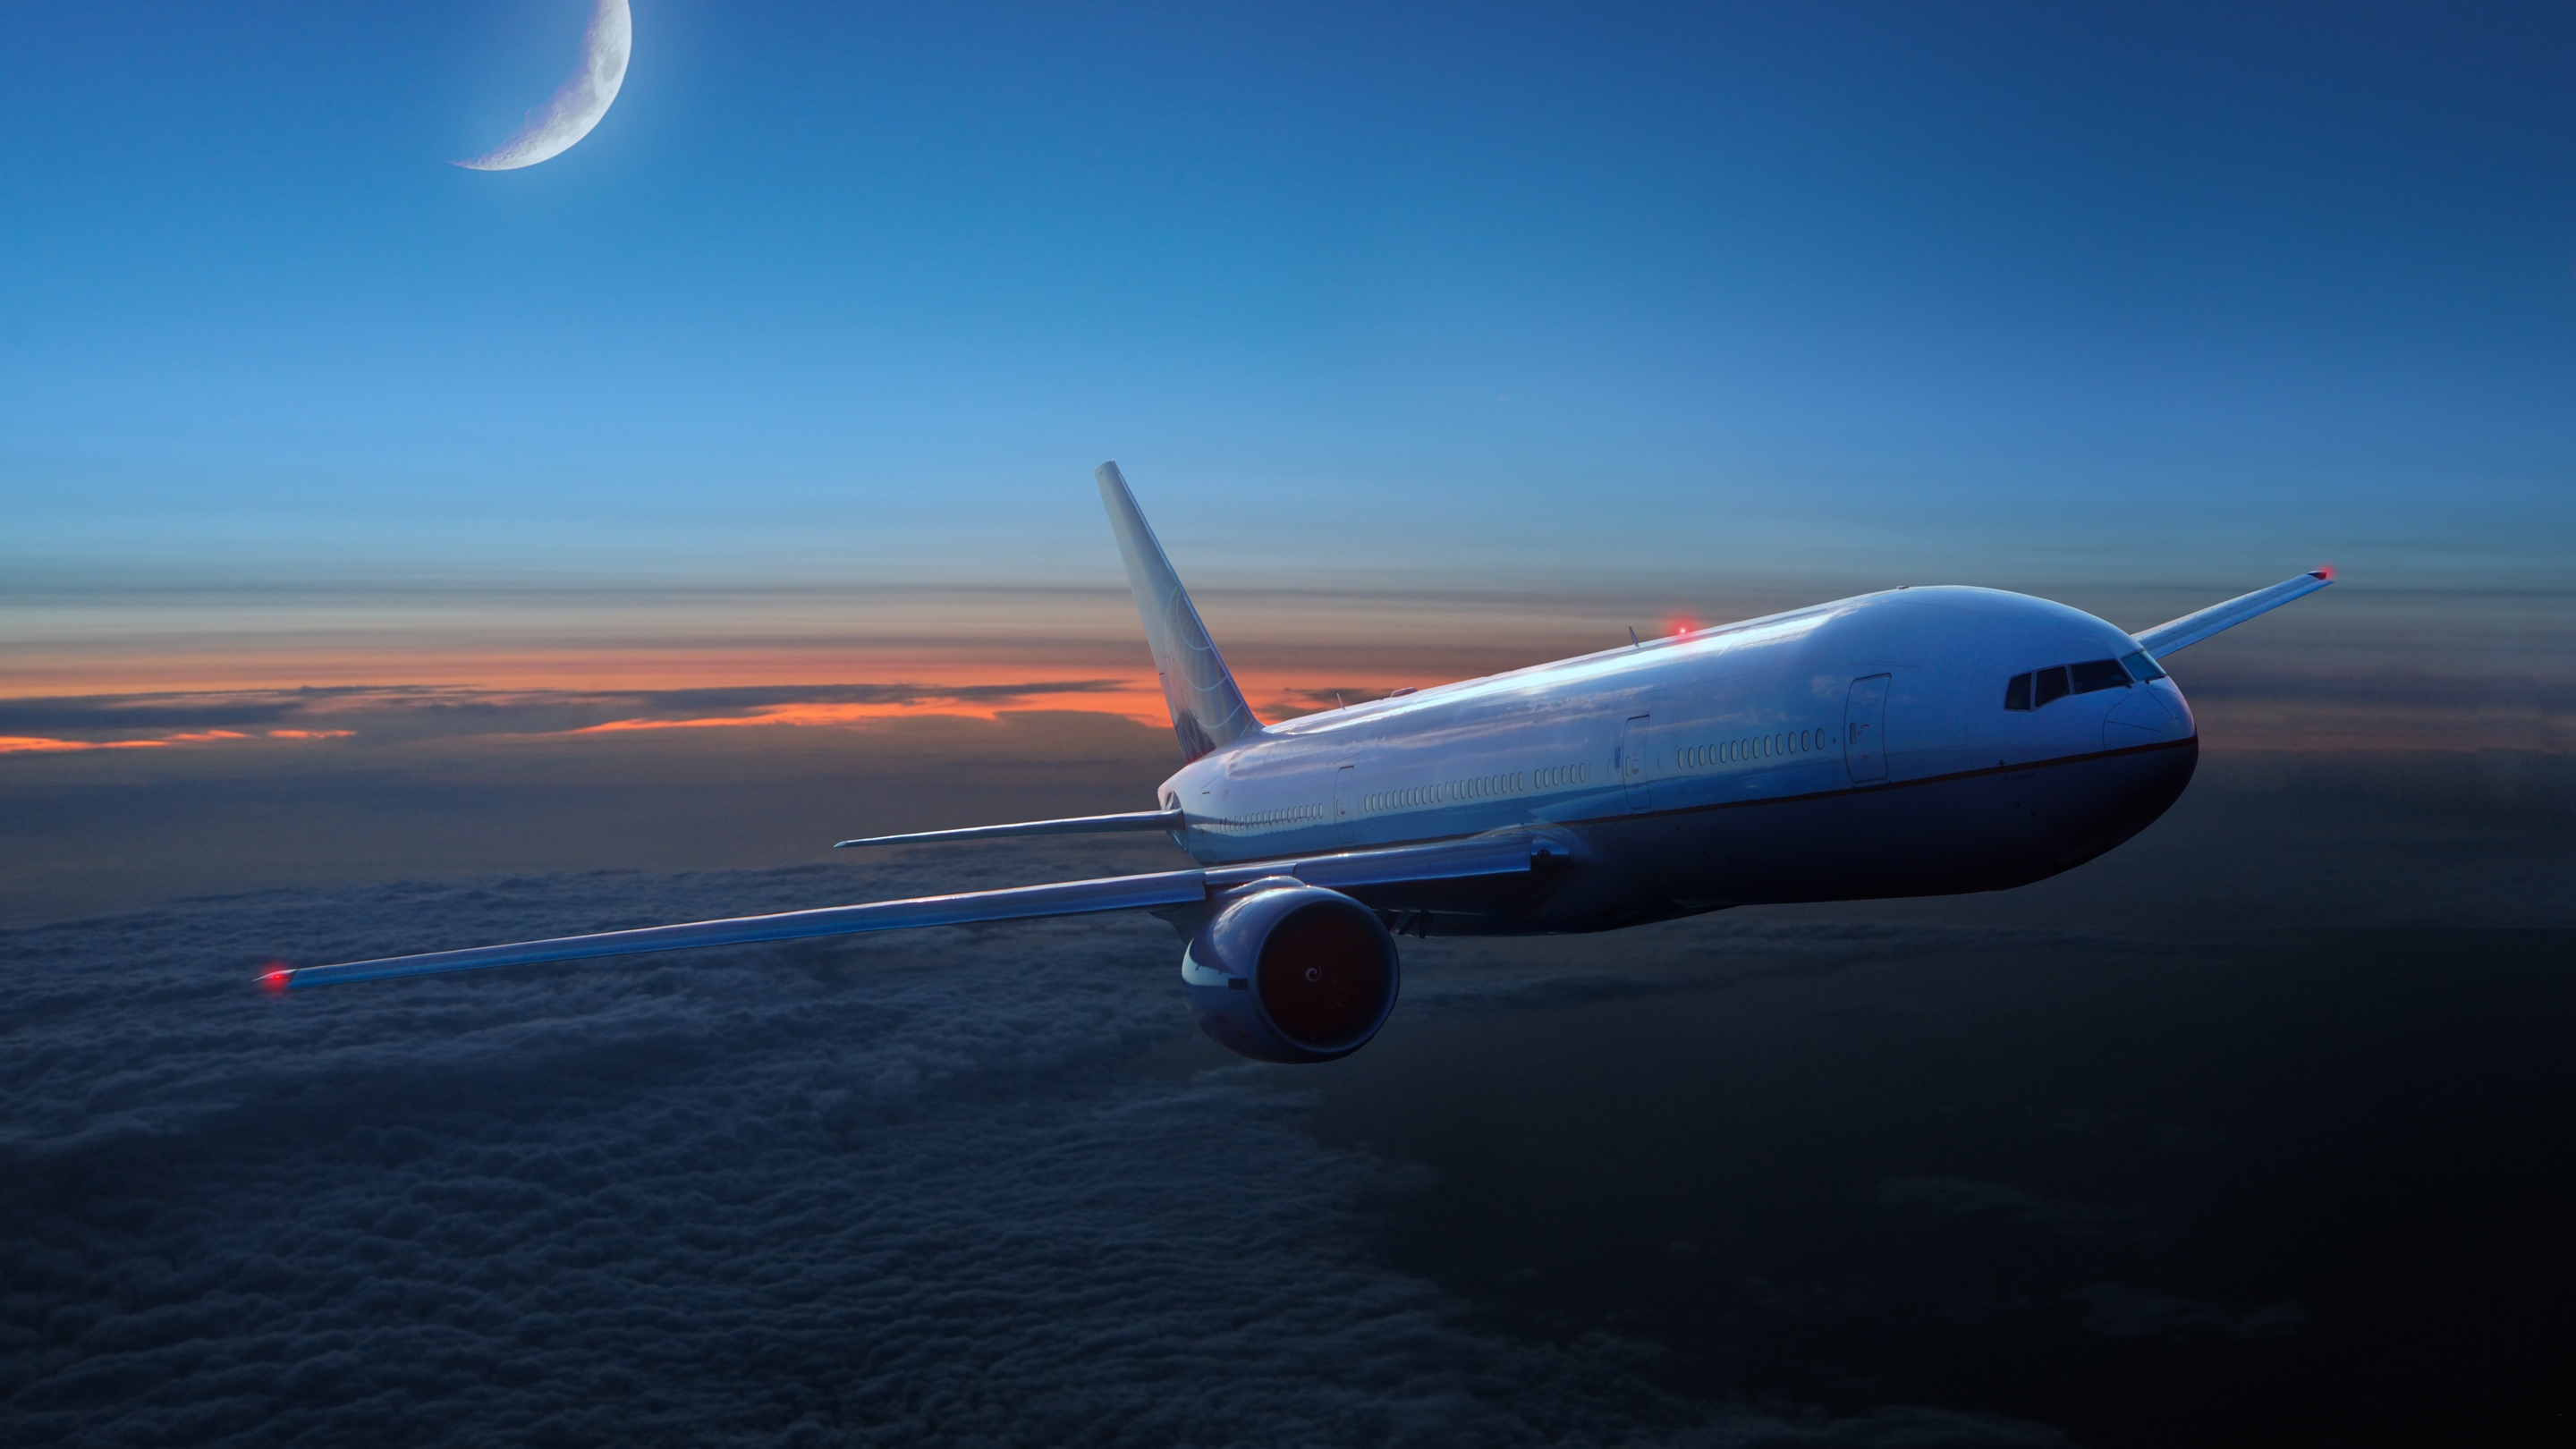 Image: Plane, evening, dusk, clouds, sky, moon